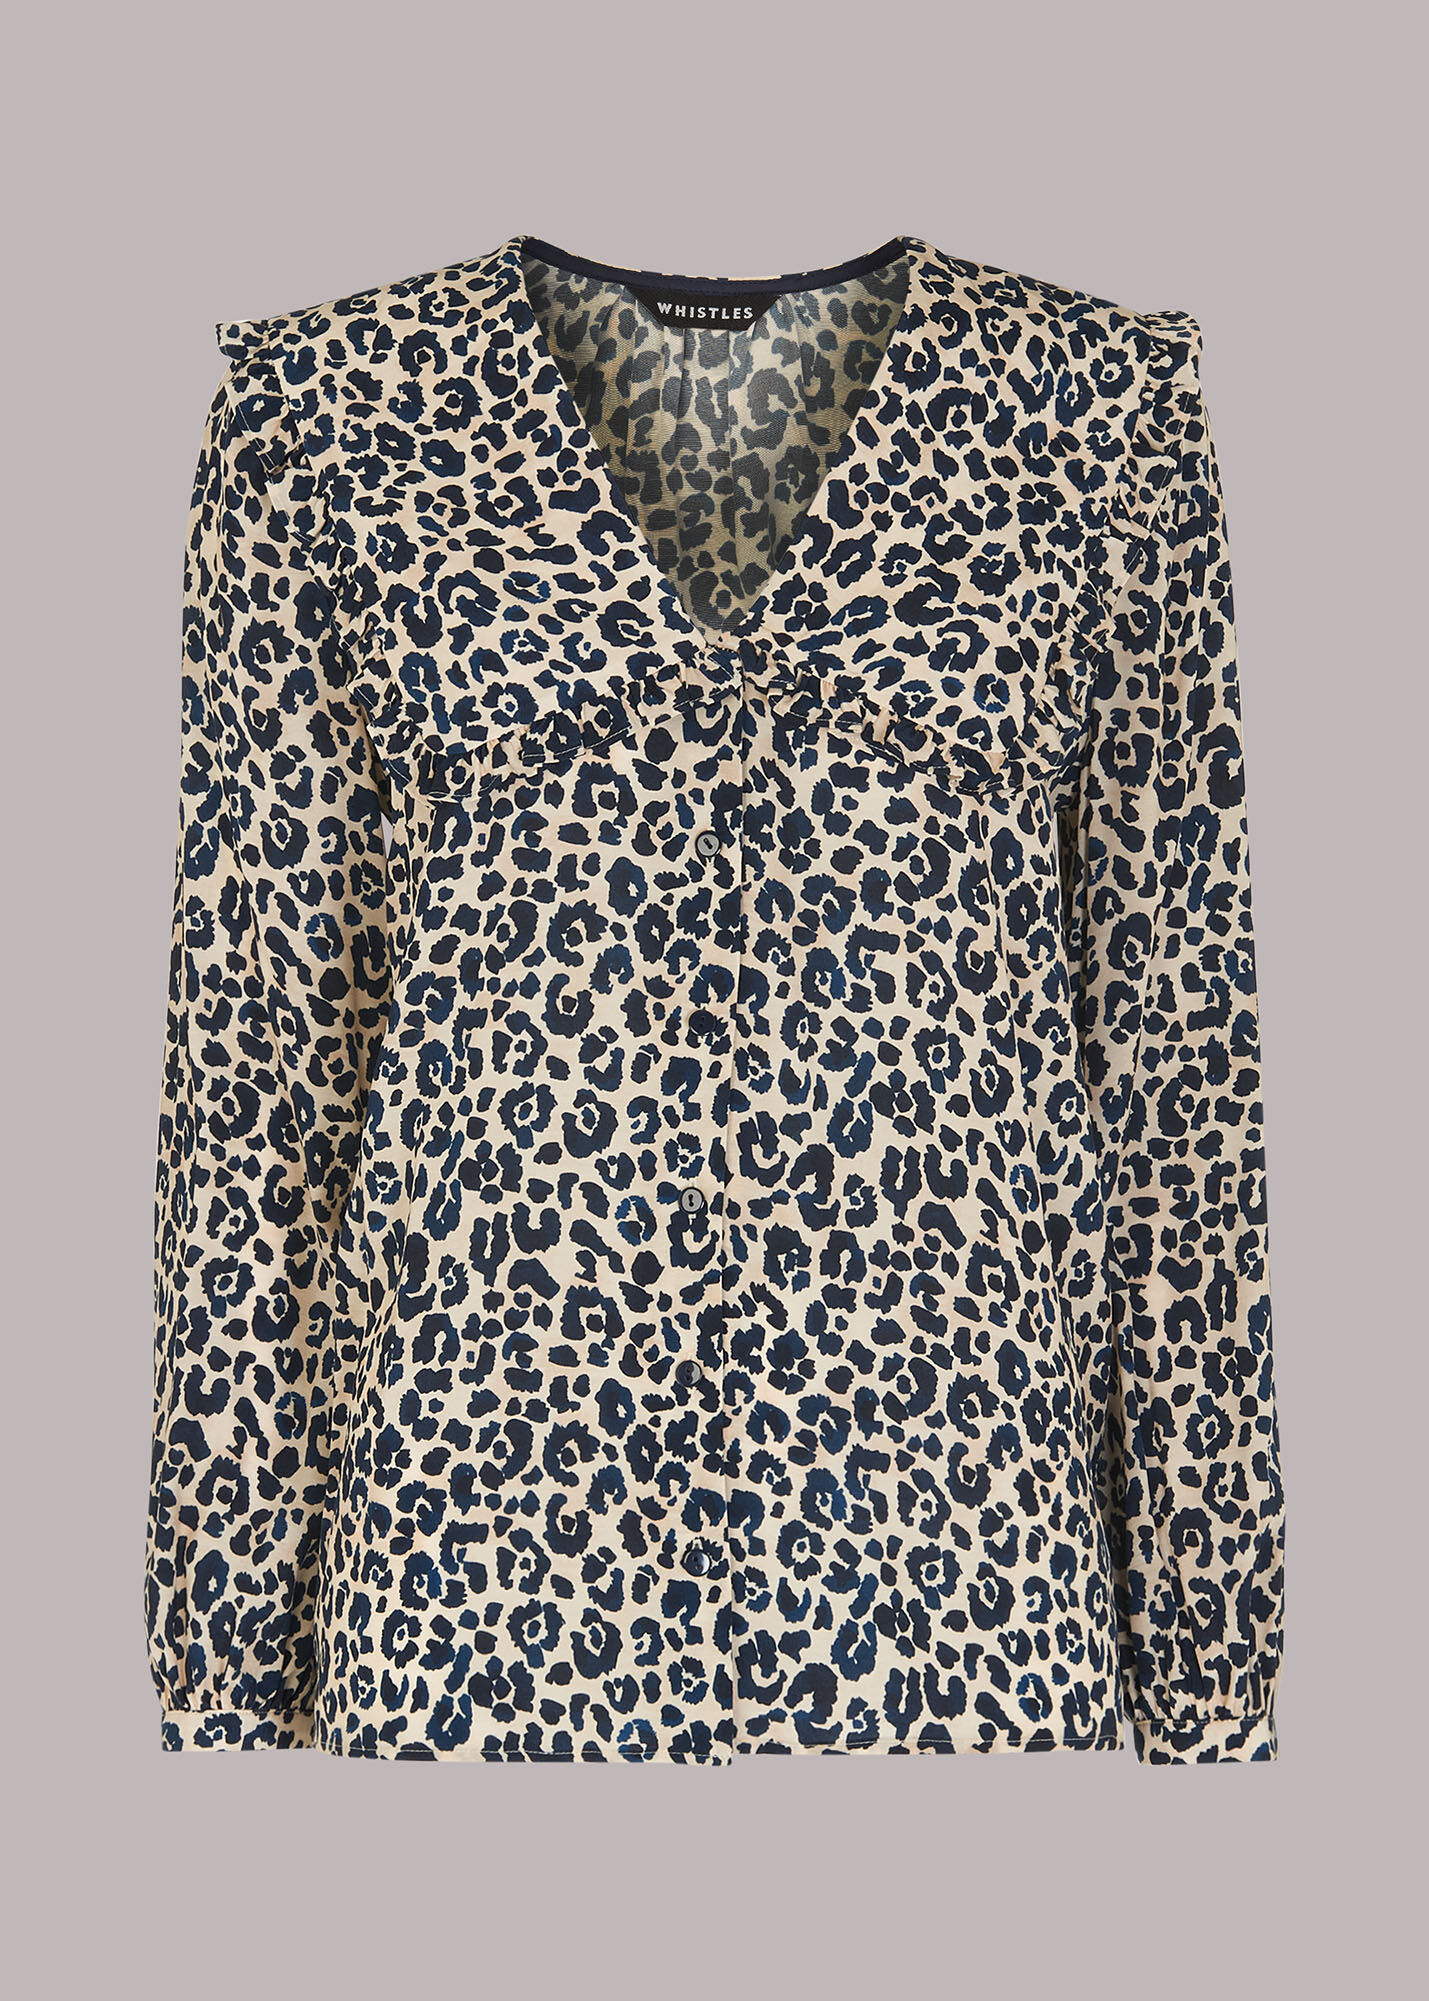 Leopard Print Cheetah Print Collar Top ...